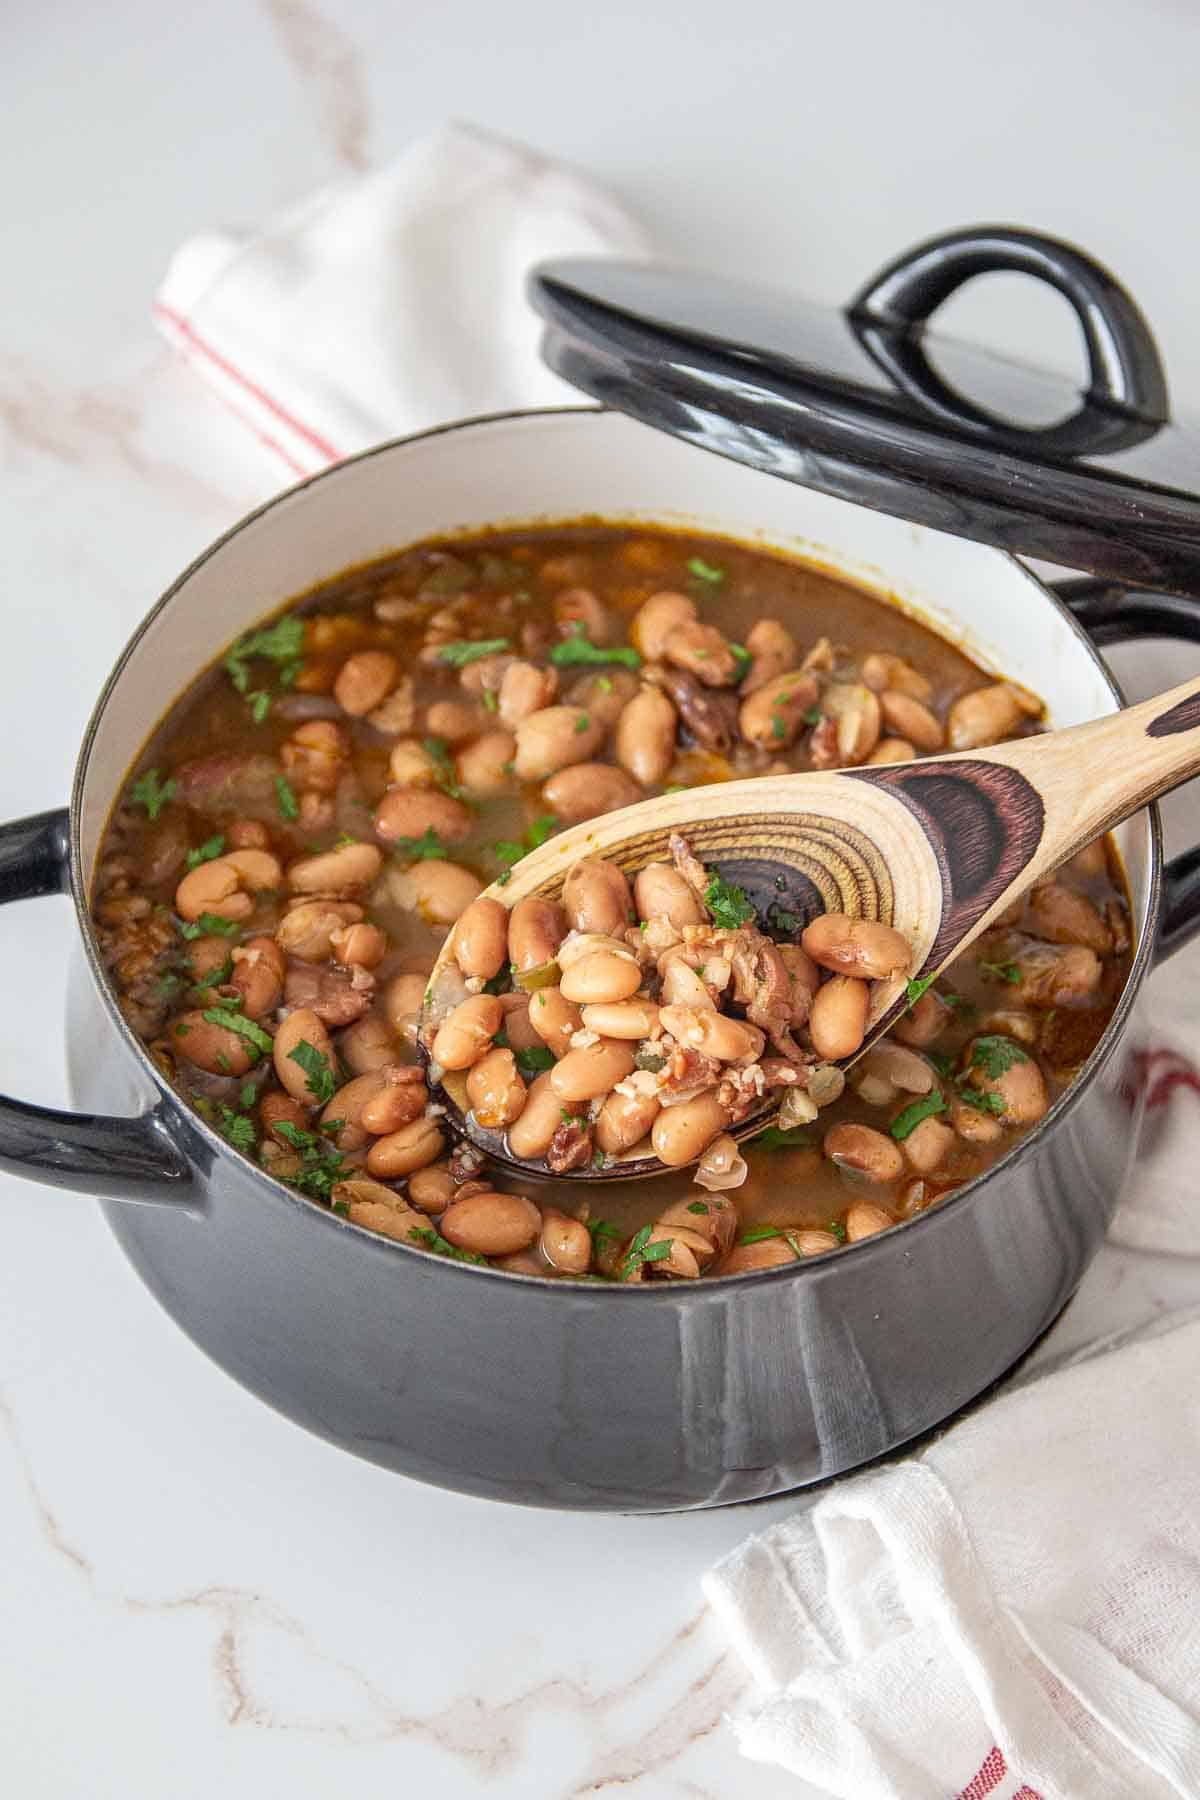 borracho beans in pot with spoon